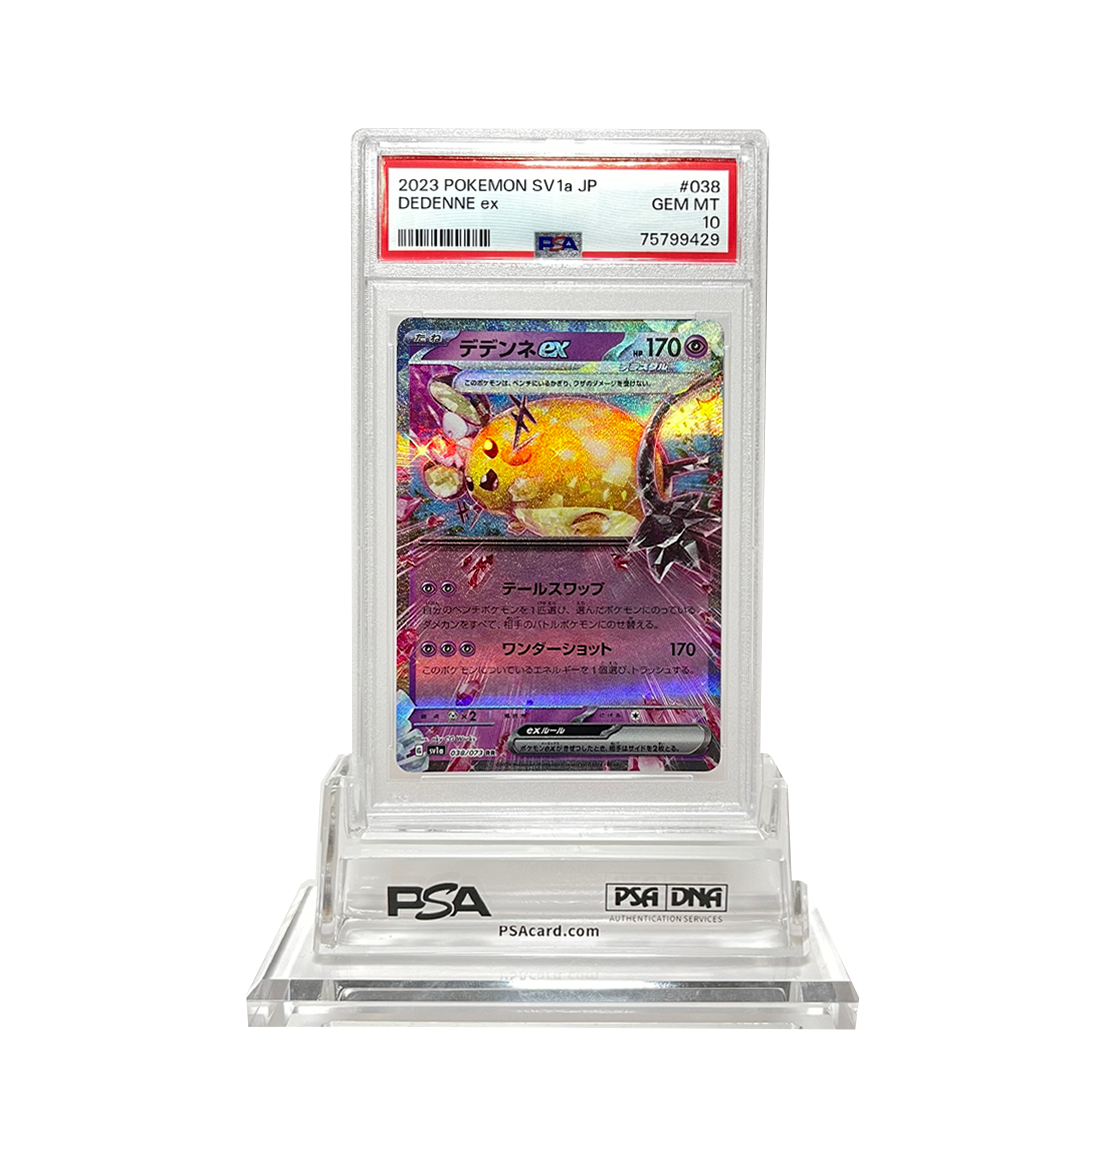 PSA 10 Dedenne ex #038 Triplet Beat SV1a Japanese Pokemon card